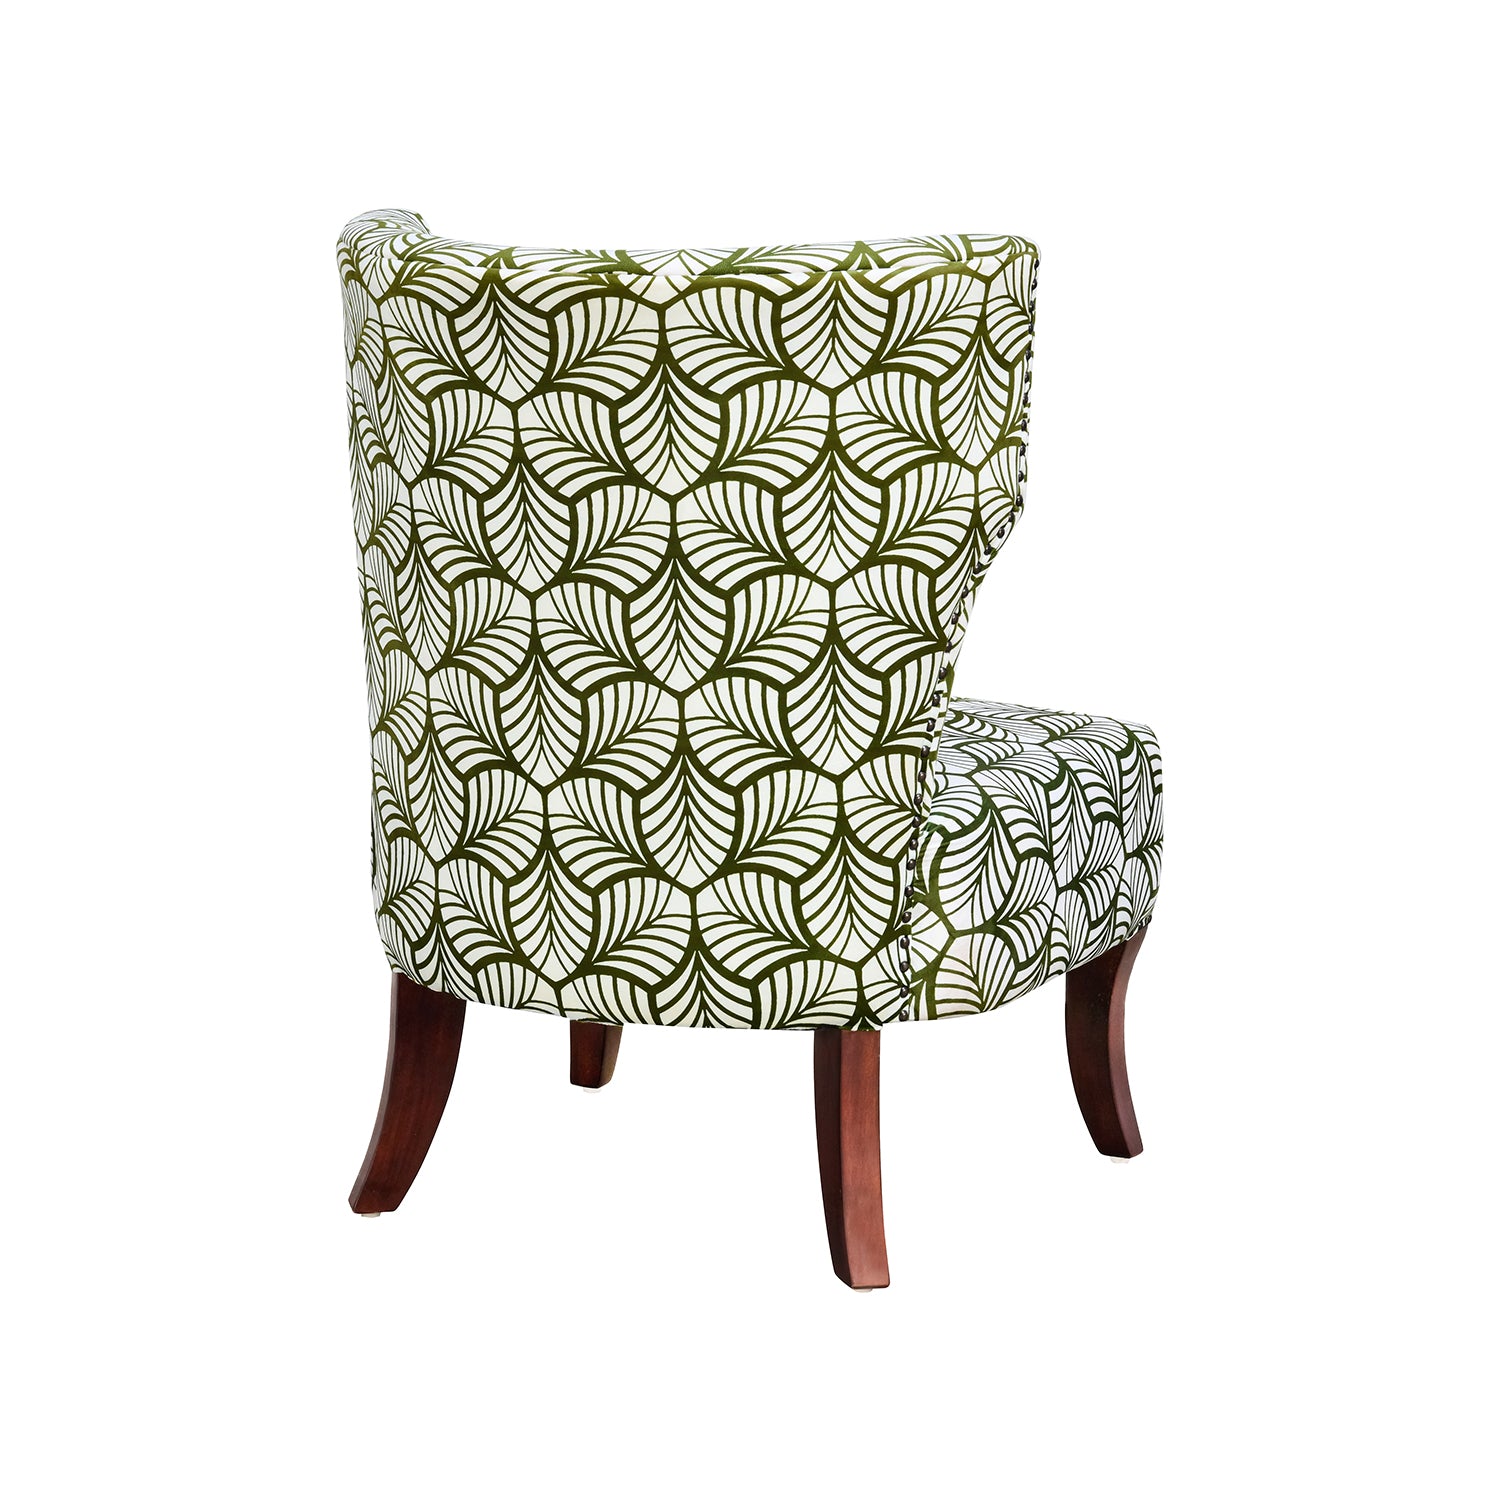 Leafy Fabric Arm Chair (Green & White)